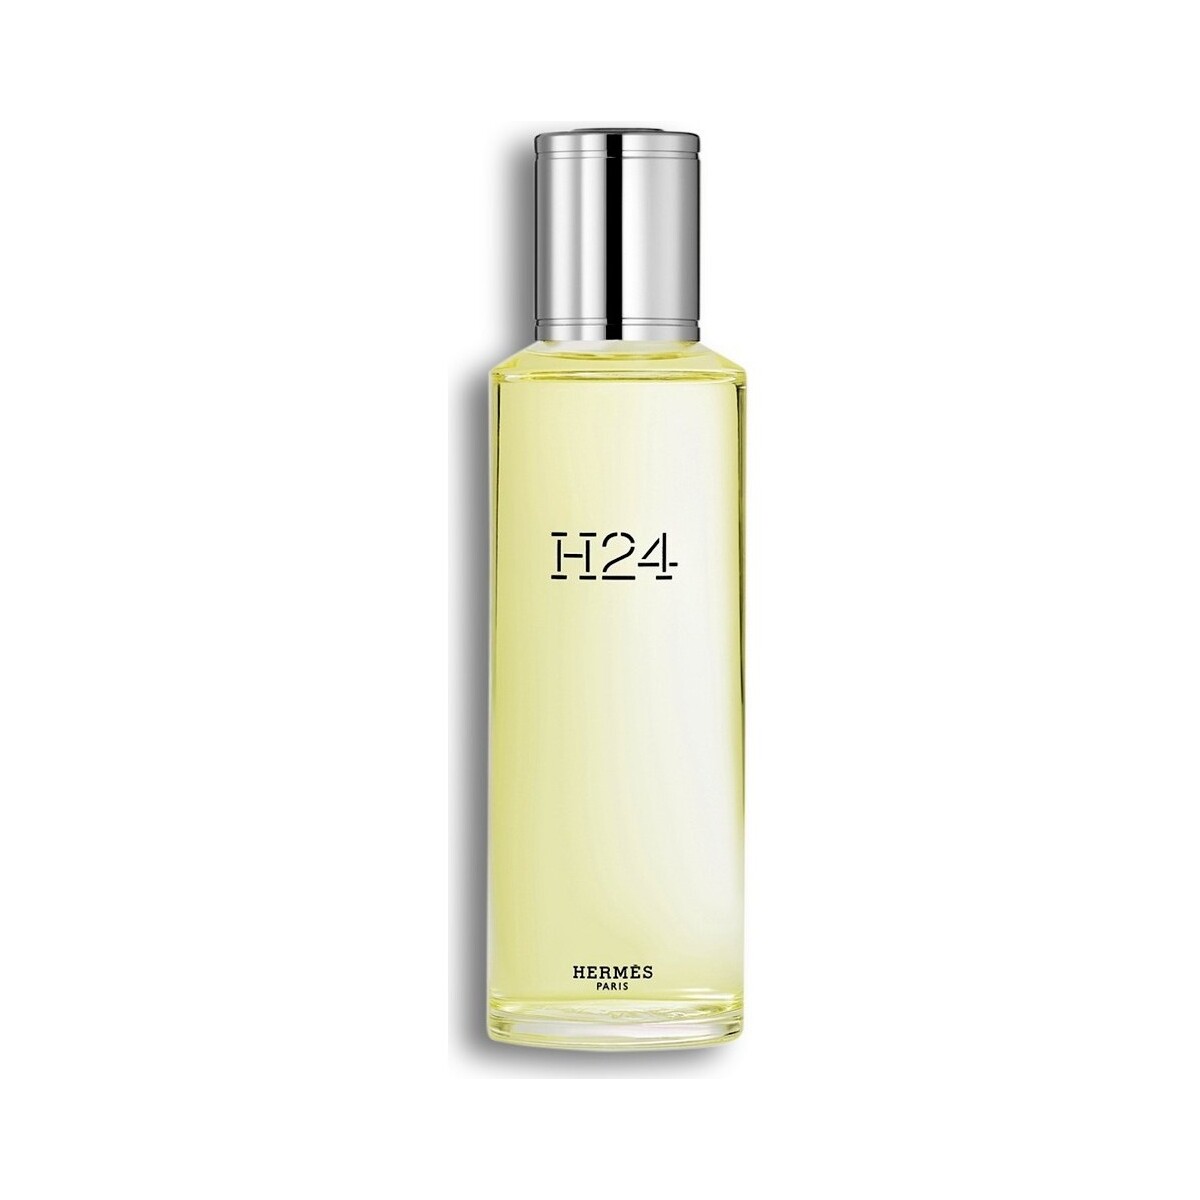 Beauty Herren Kölnisch Wasser Hermès Paris H24 - köln - 125ml - Recarga H24 - cologne - 125ml - Recarga